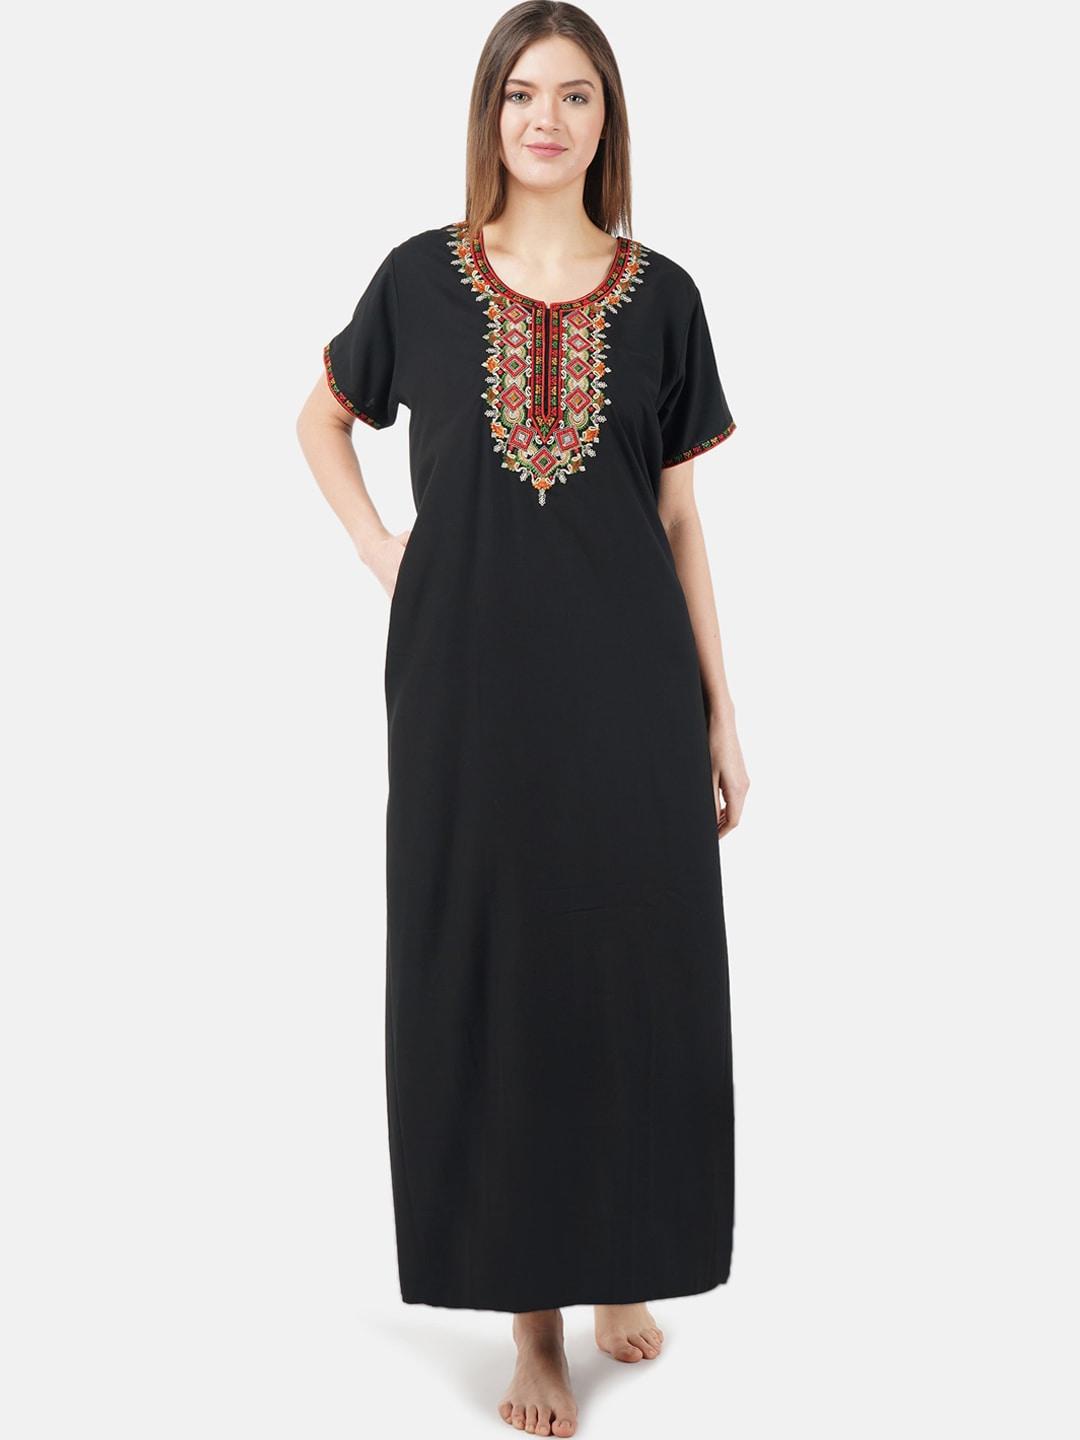 koi-sleepwear-black-embroidered-nightdress